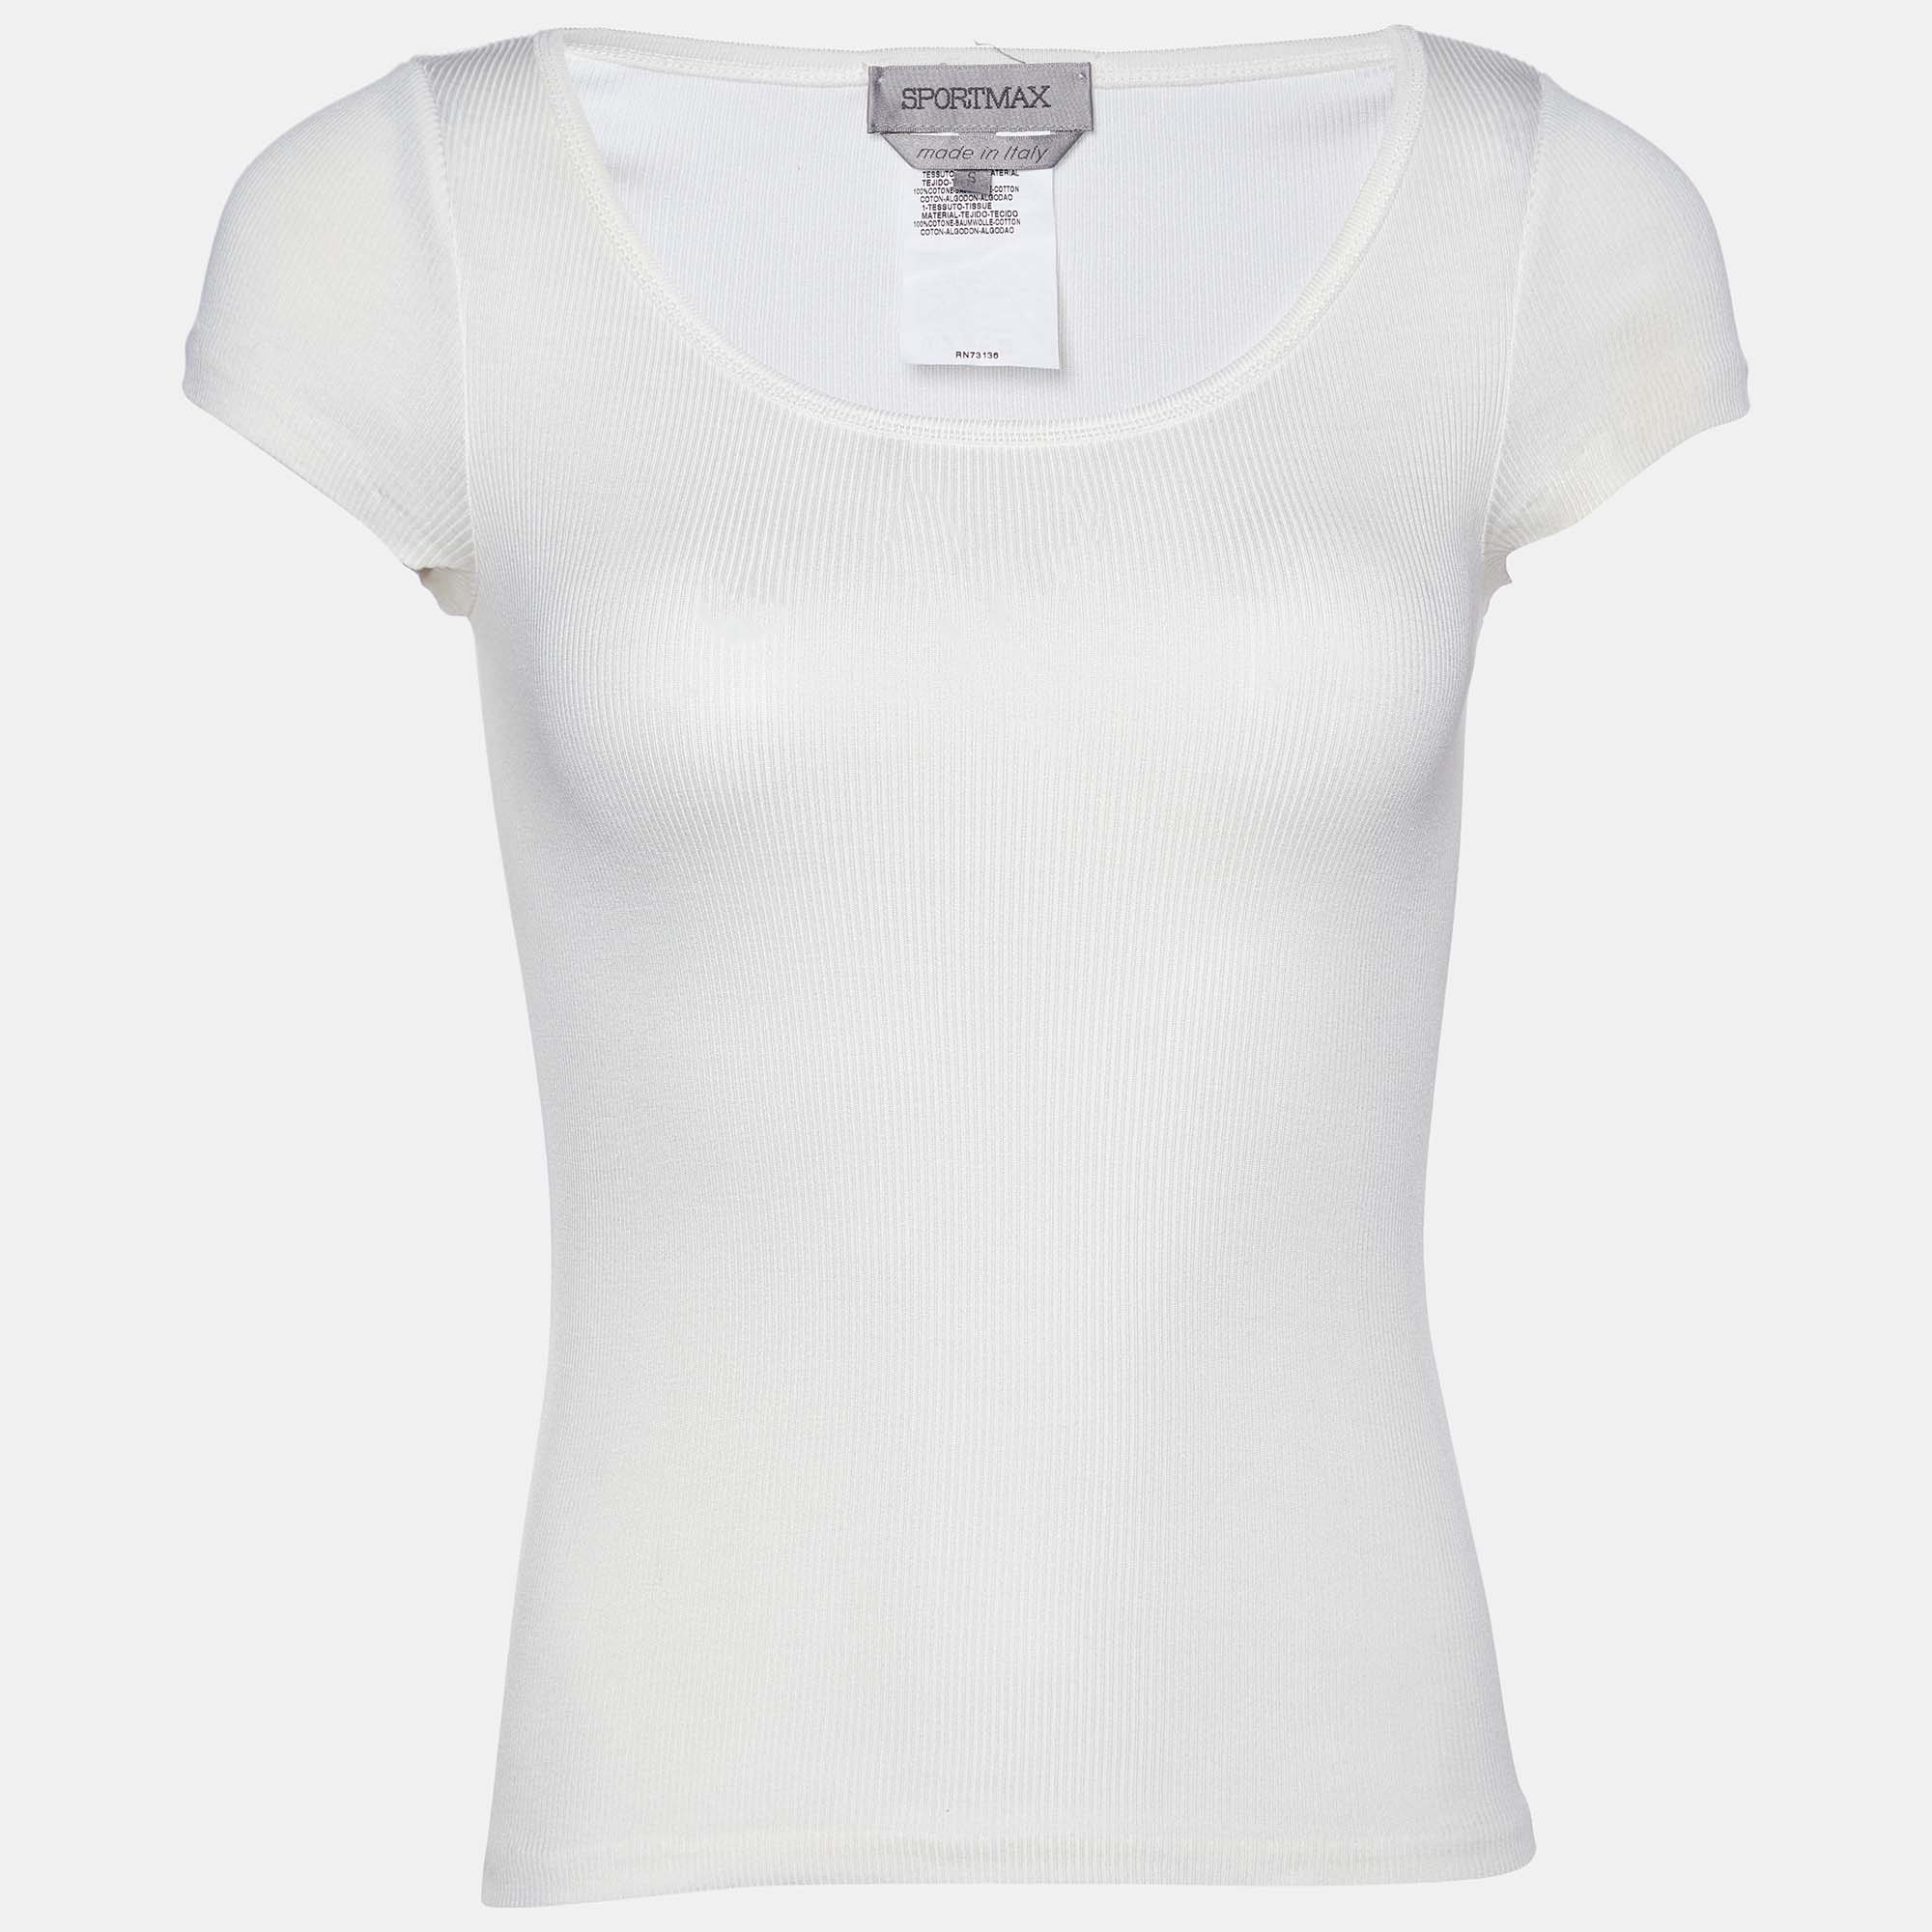 

Sportmax Off White Cotton Knit Short Sleeve T-Shirt